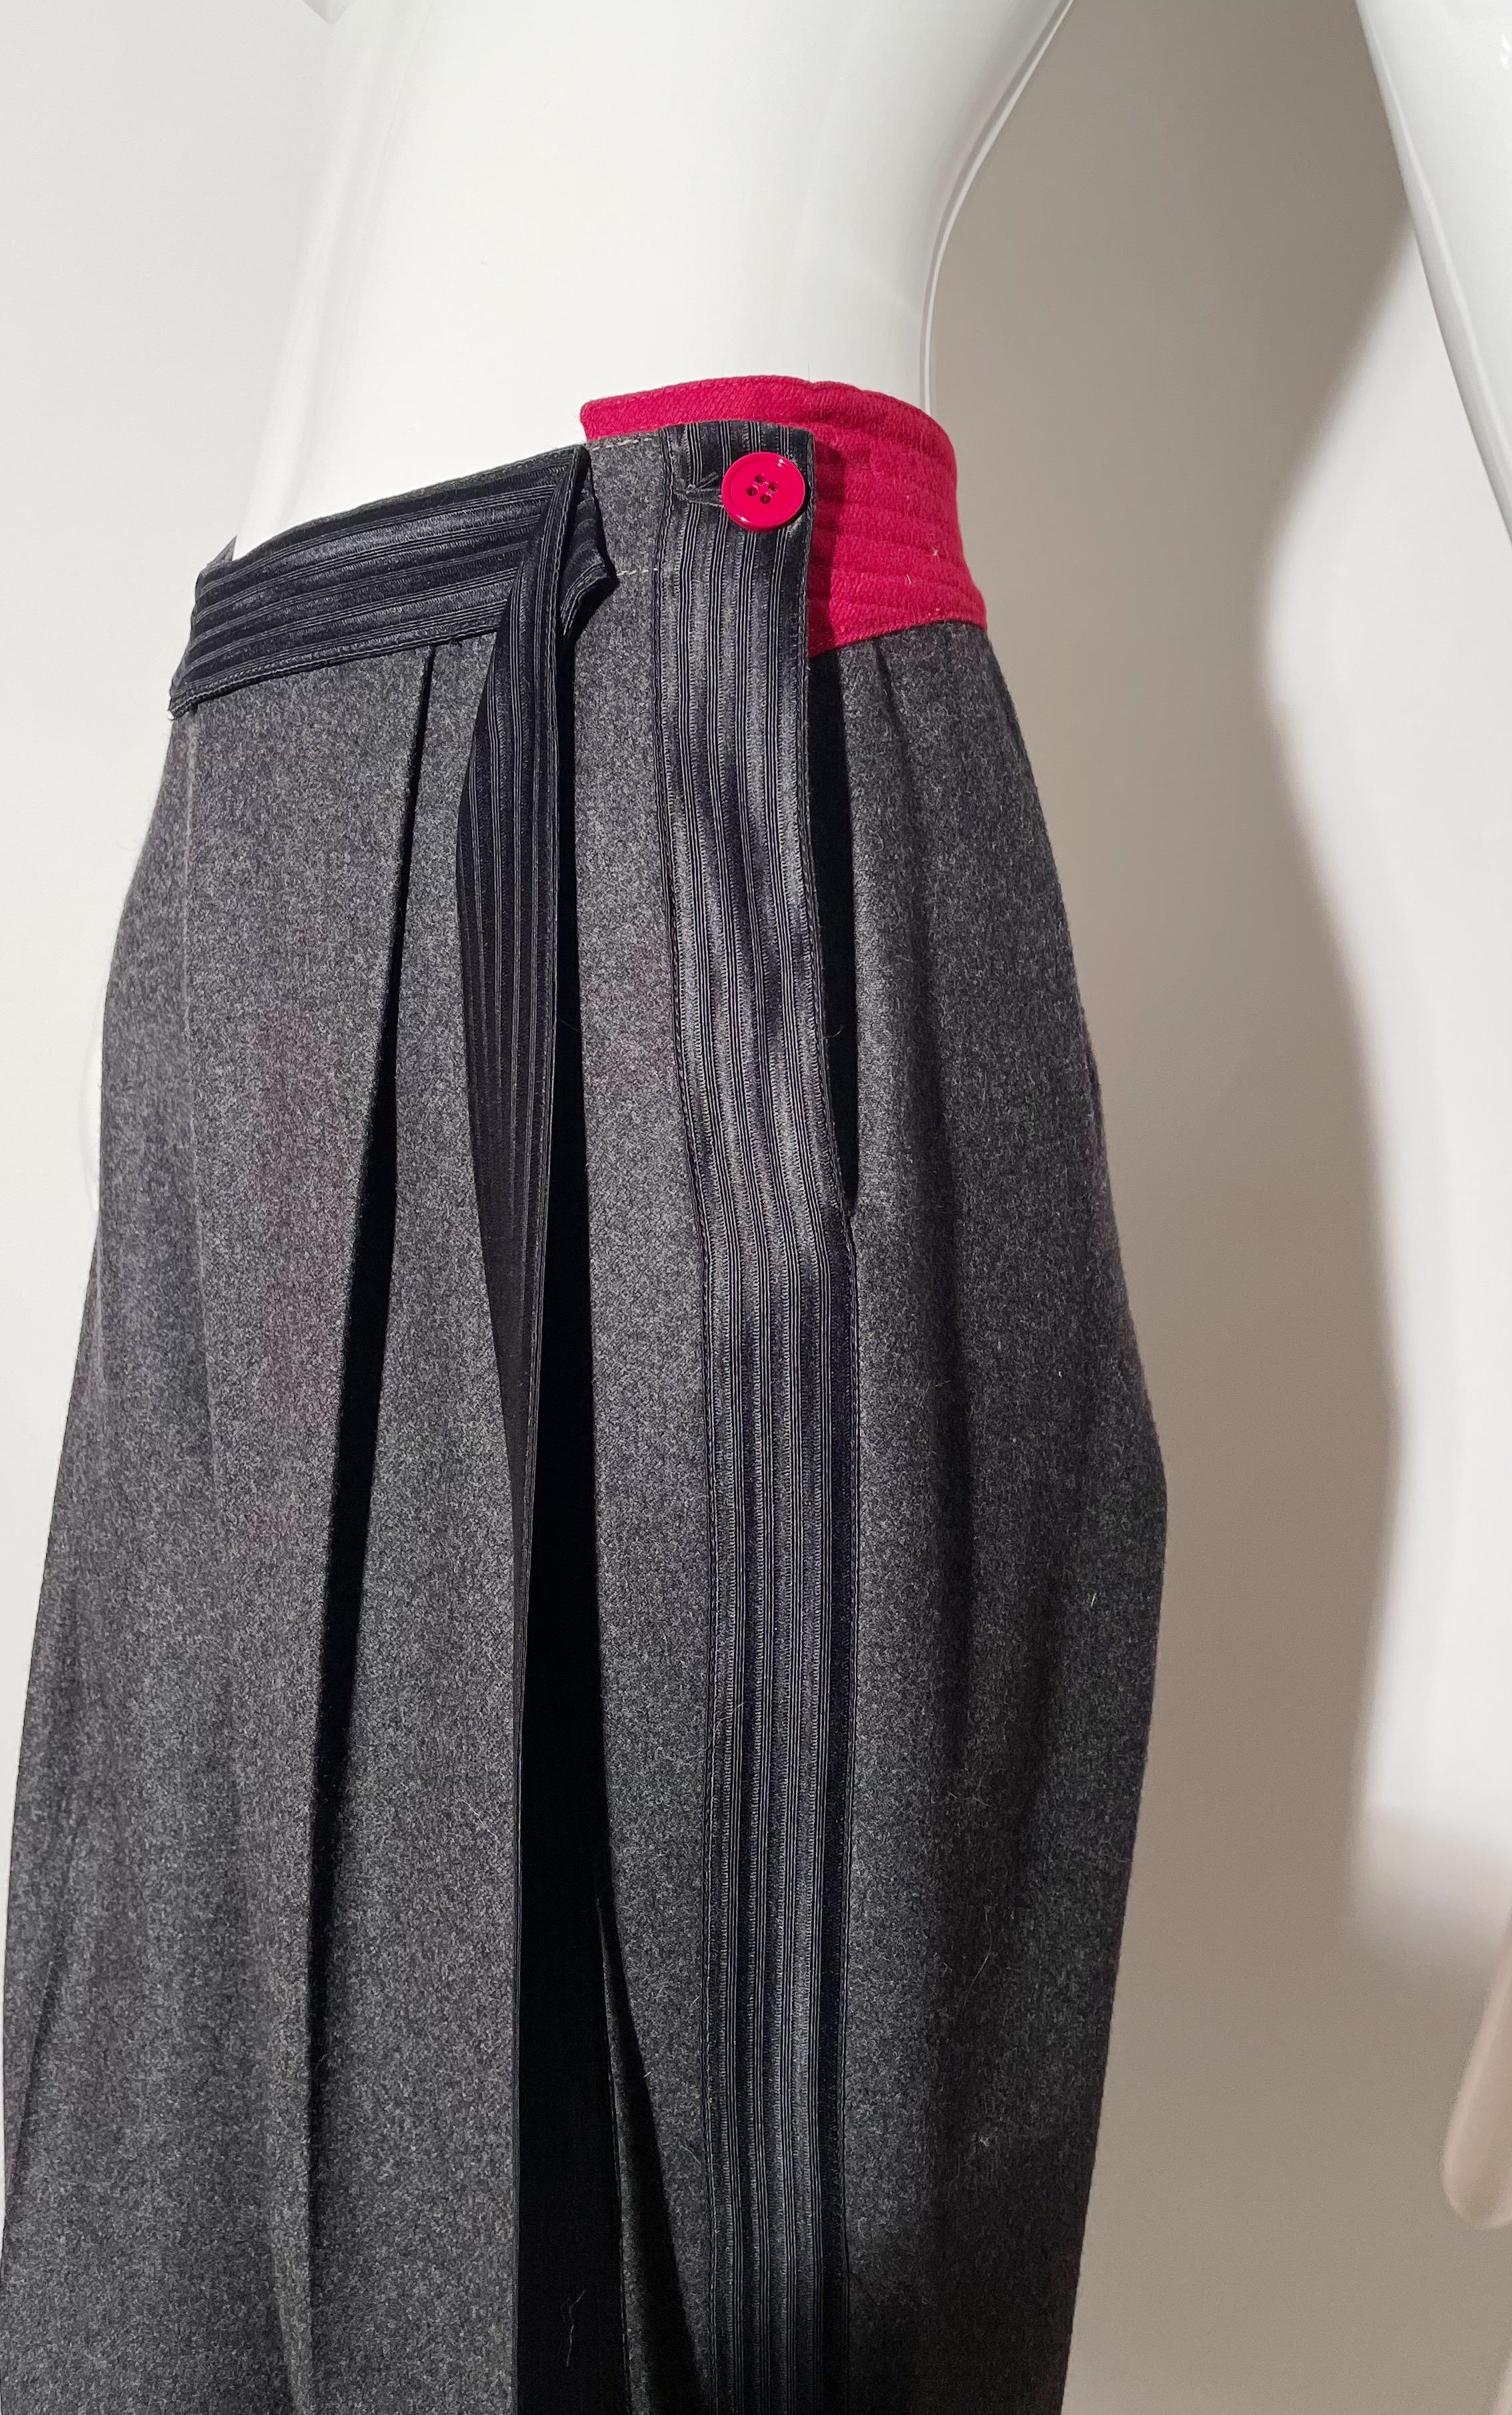 Gianfranco Ferre Tuxedo Trousers For Sale 1